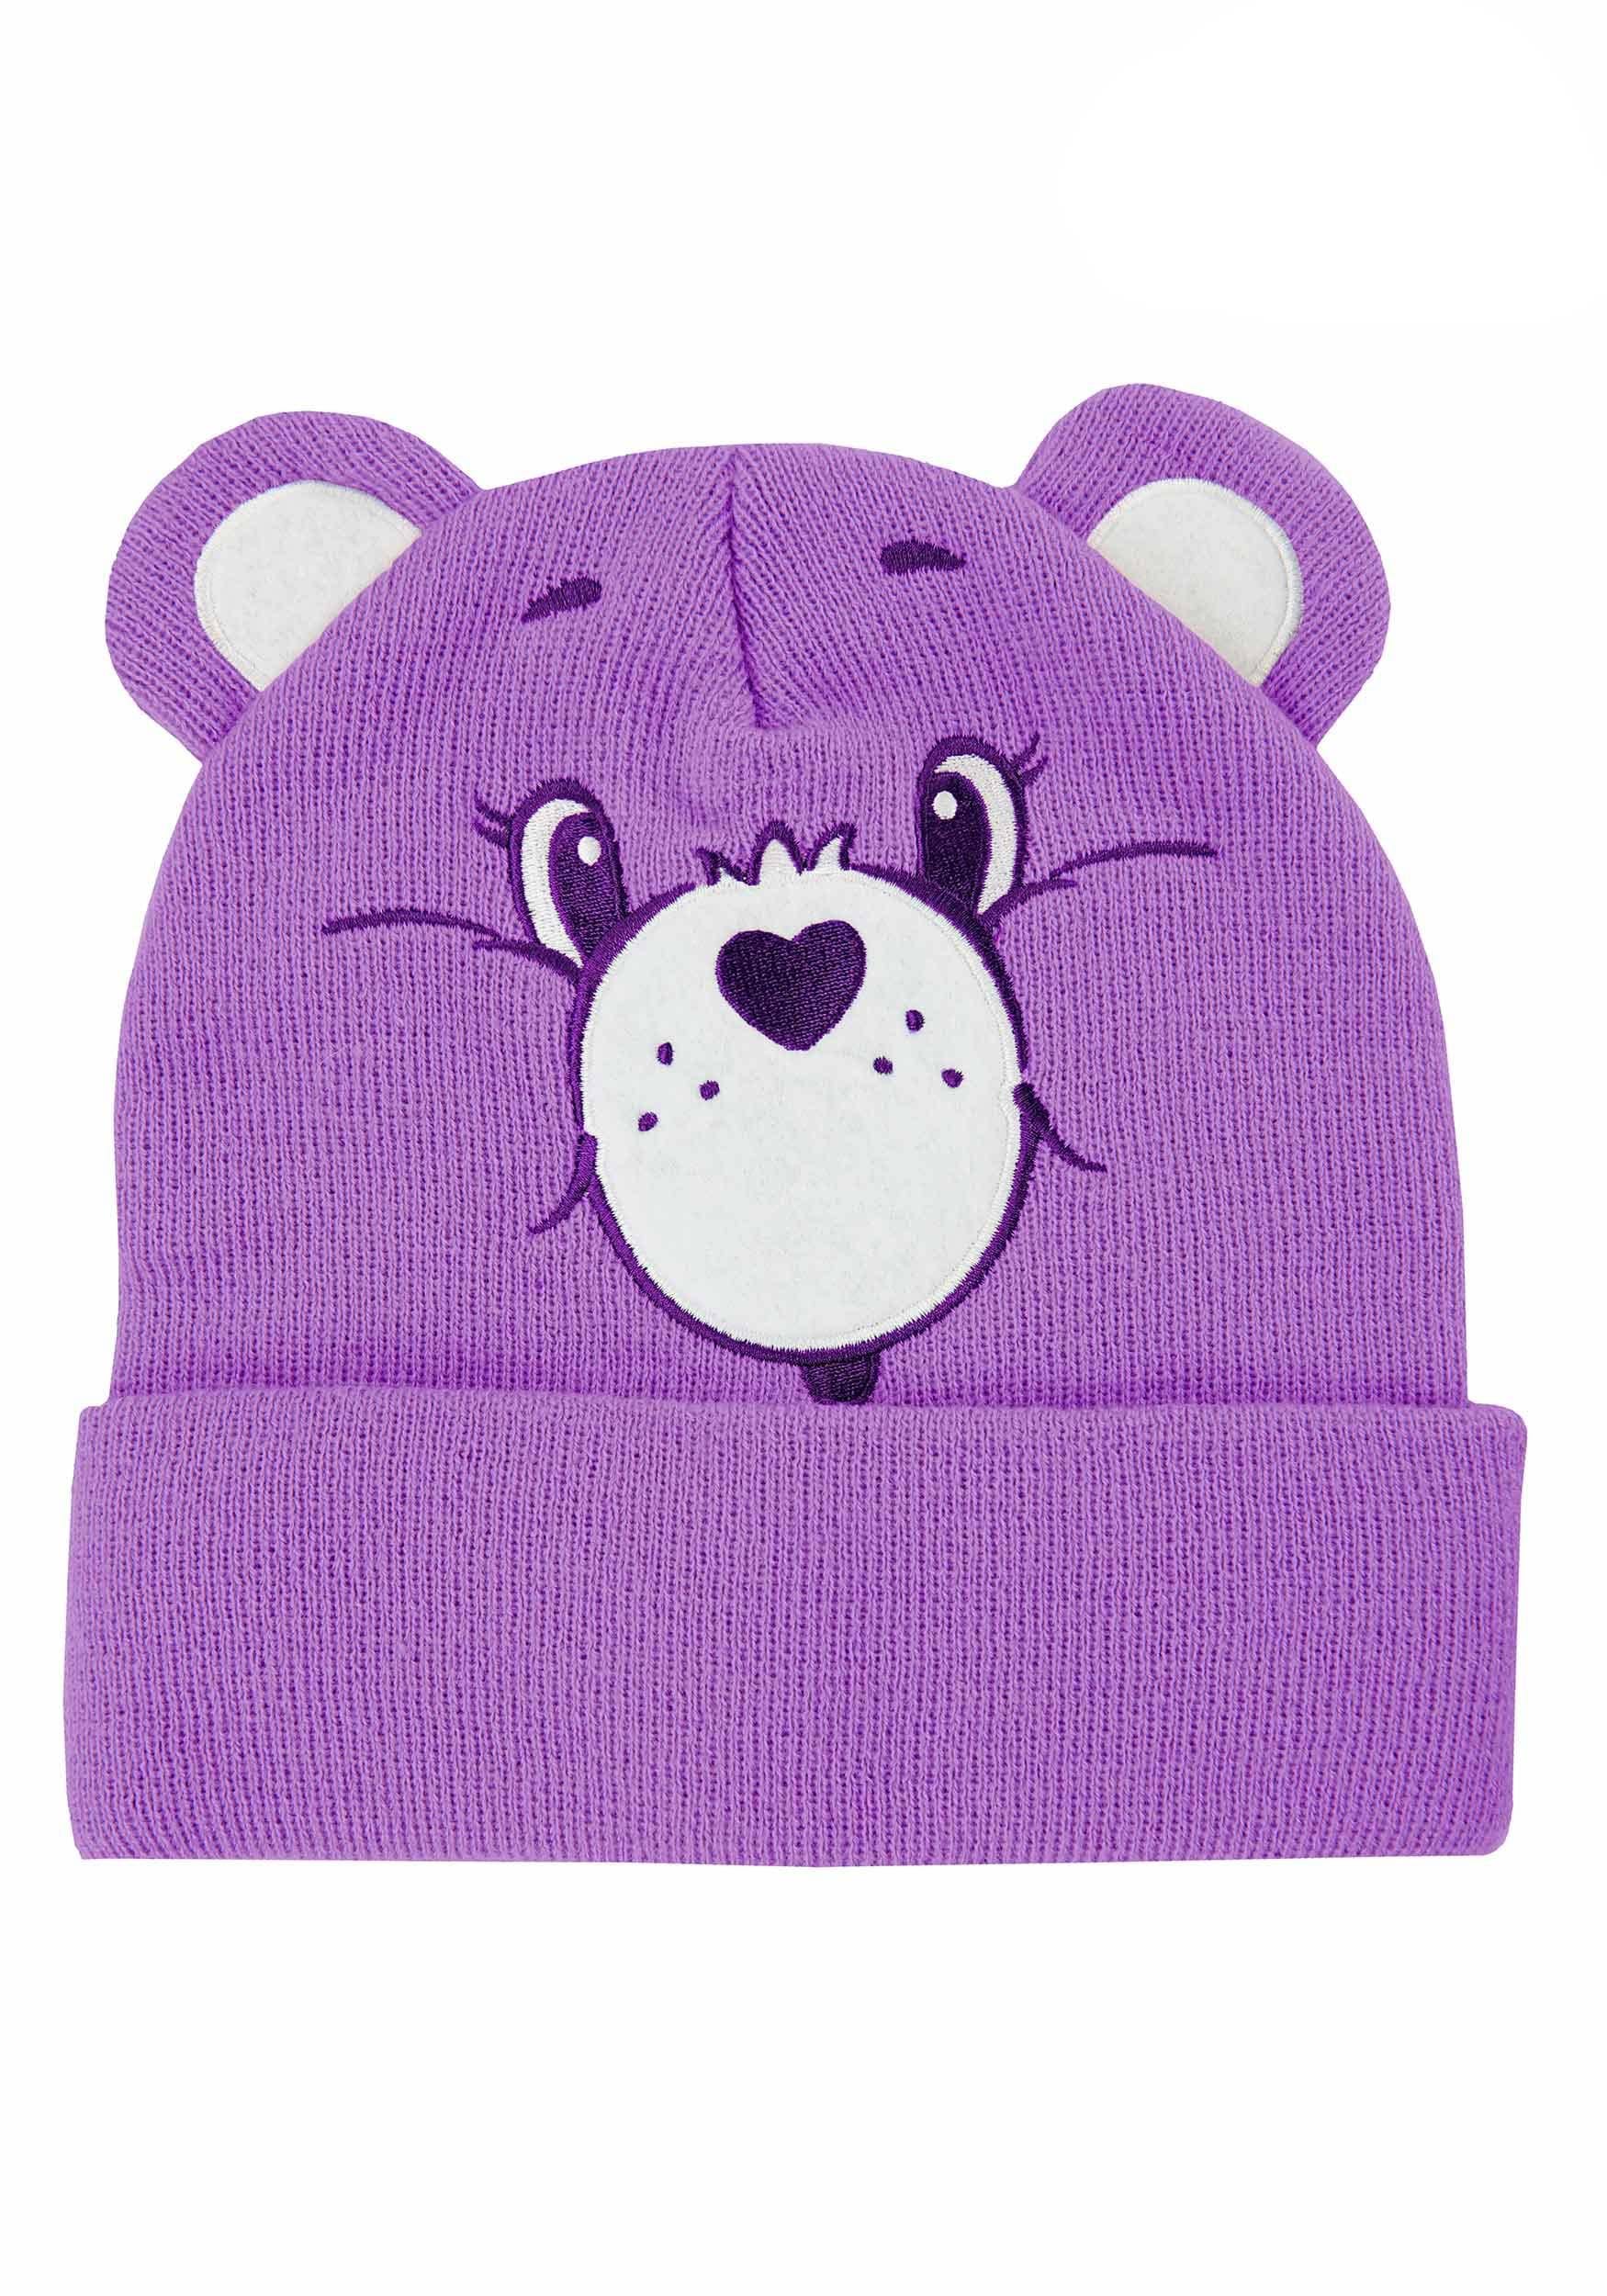 Care Bears Share Bear Adult Knit Hat